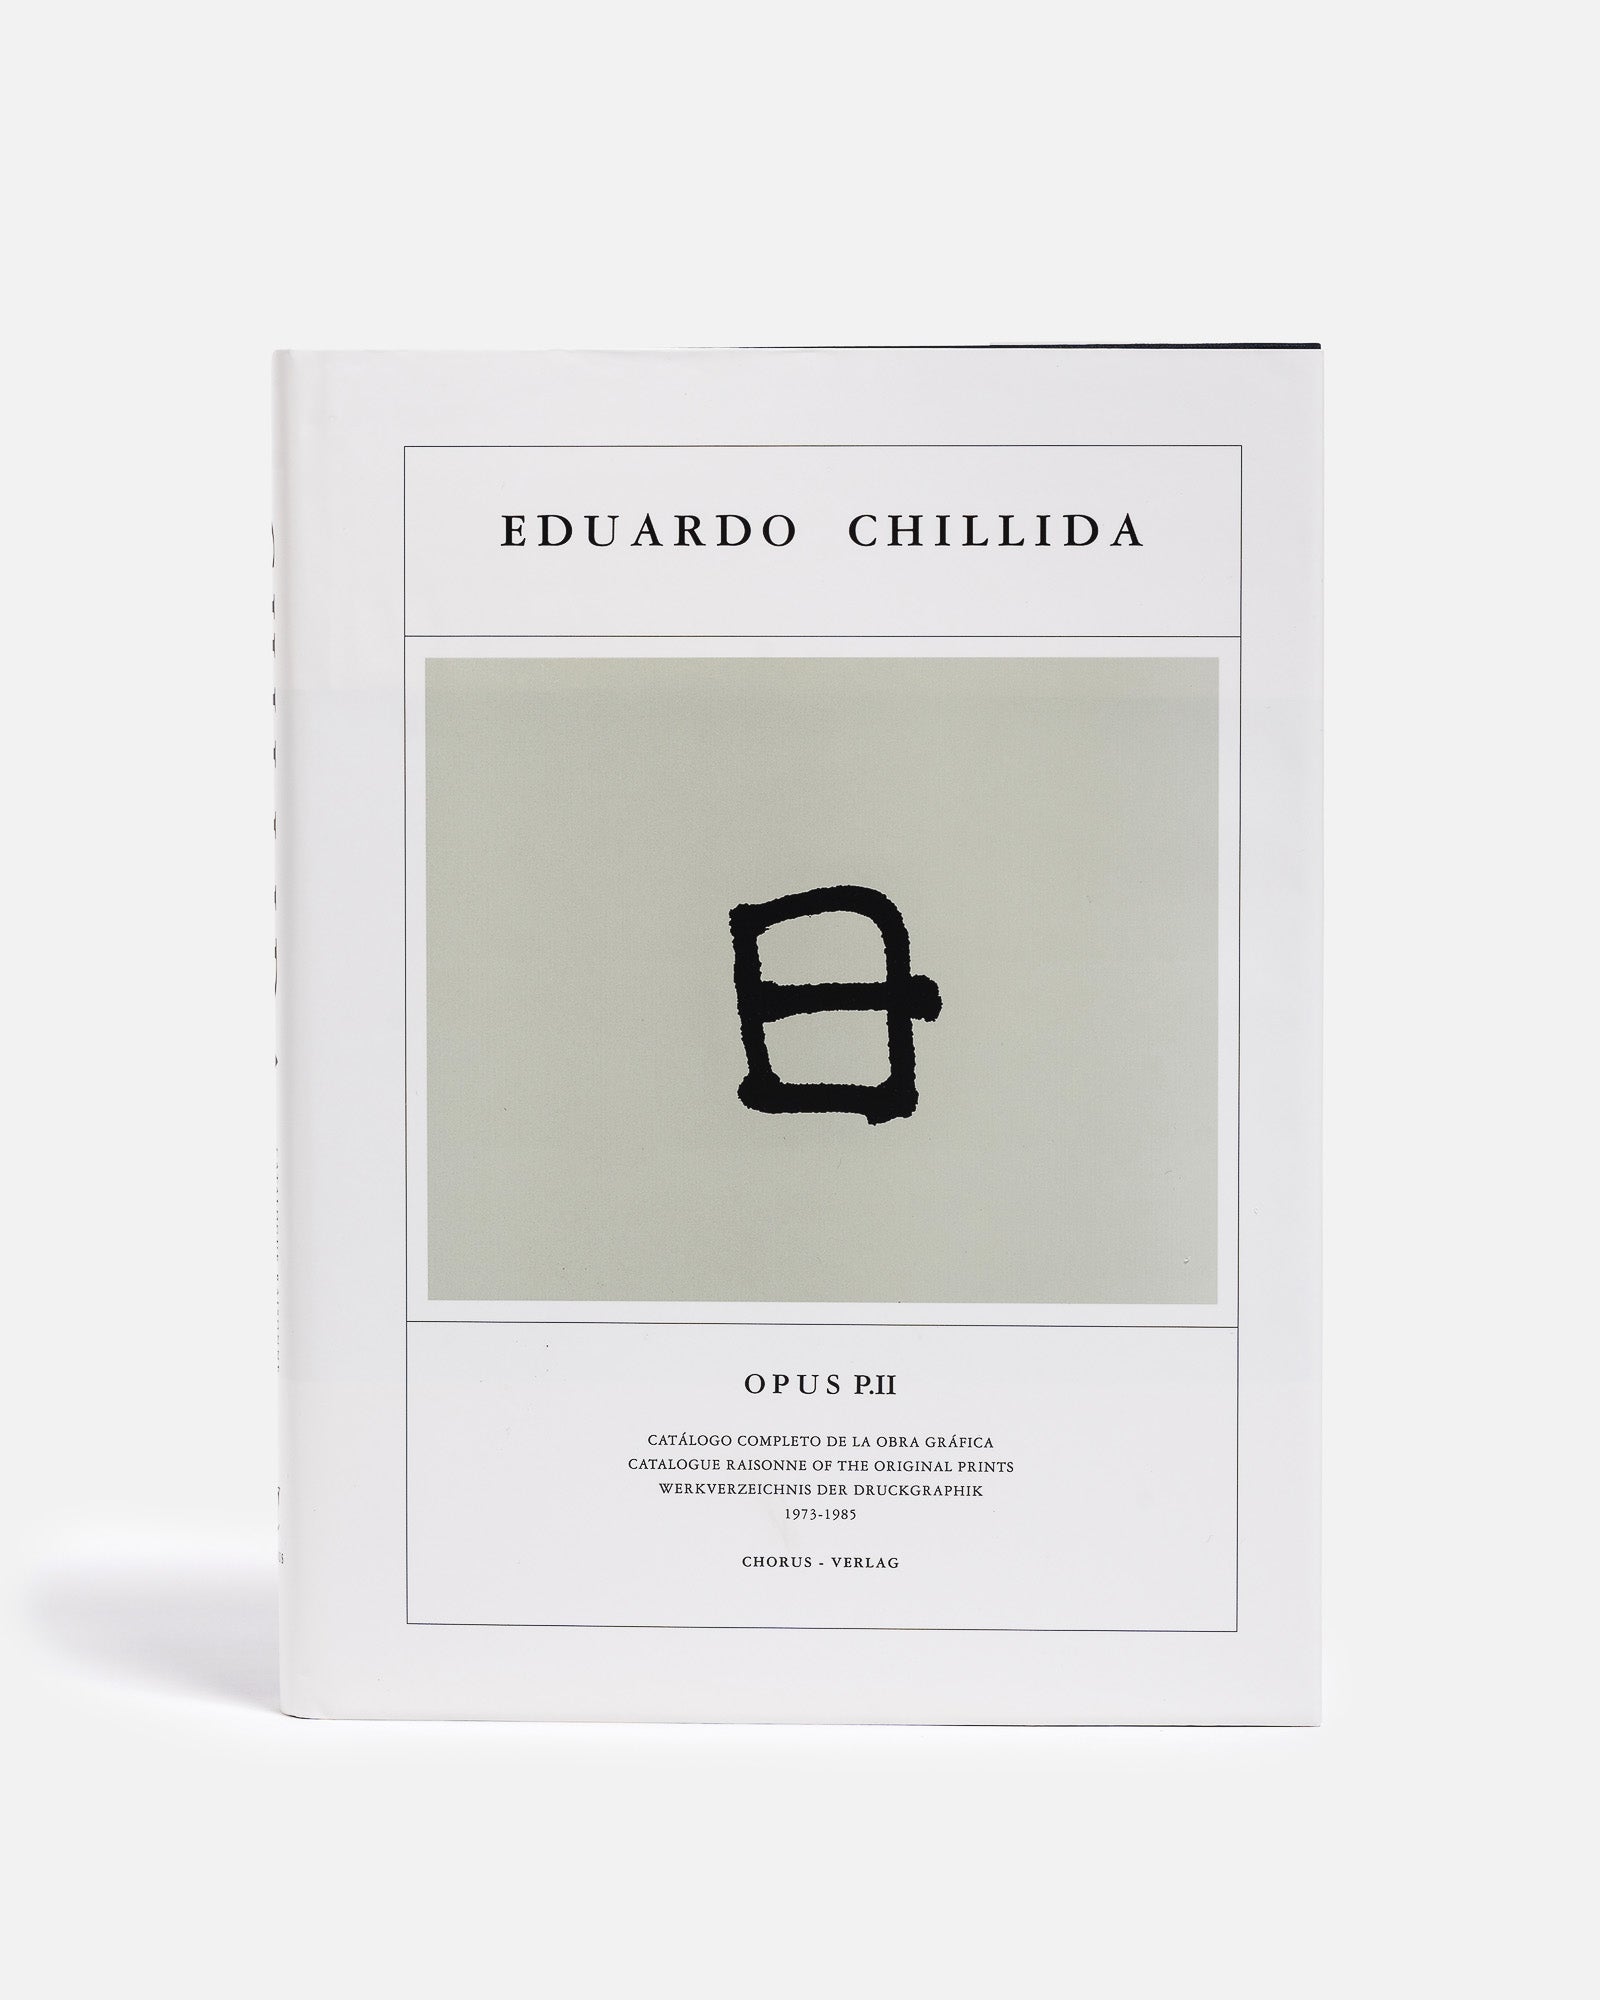 EDUARDO CHILLIDA OPUS II 1973 - 1985